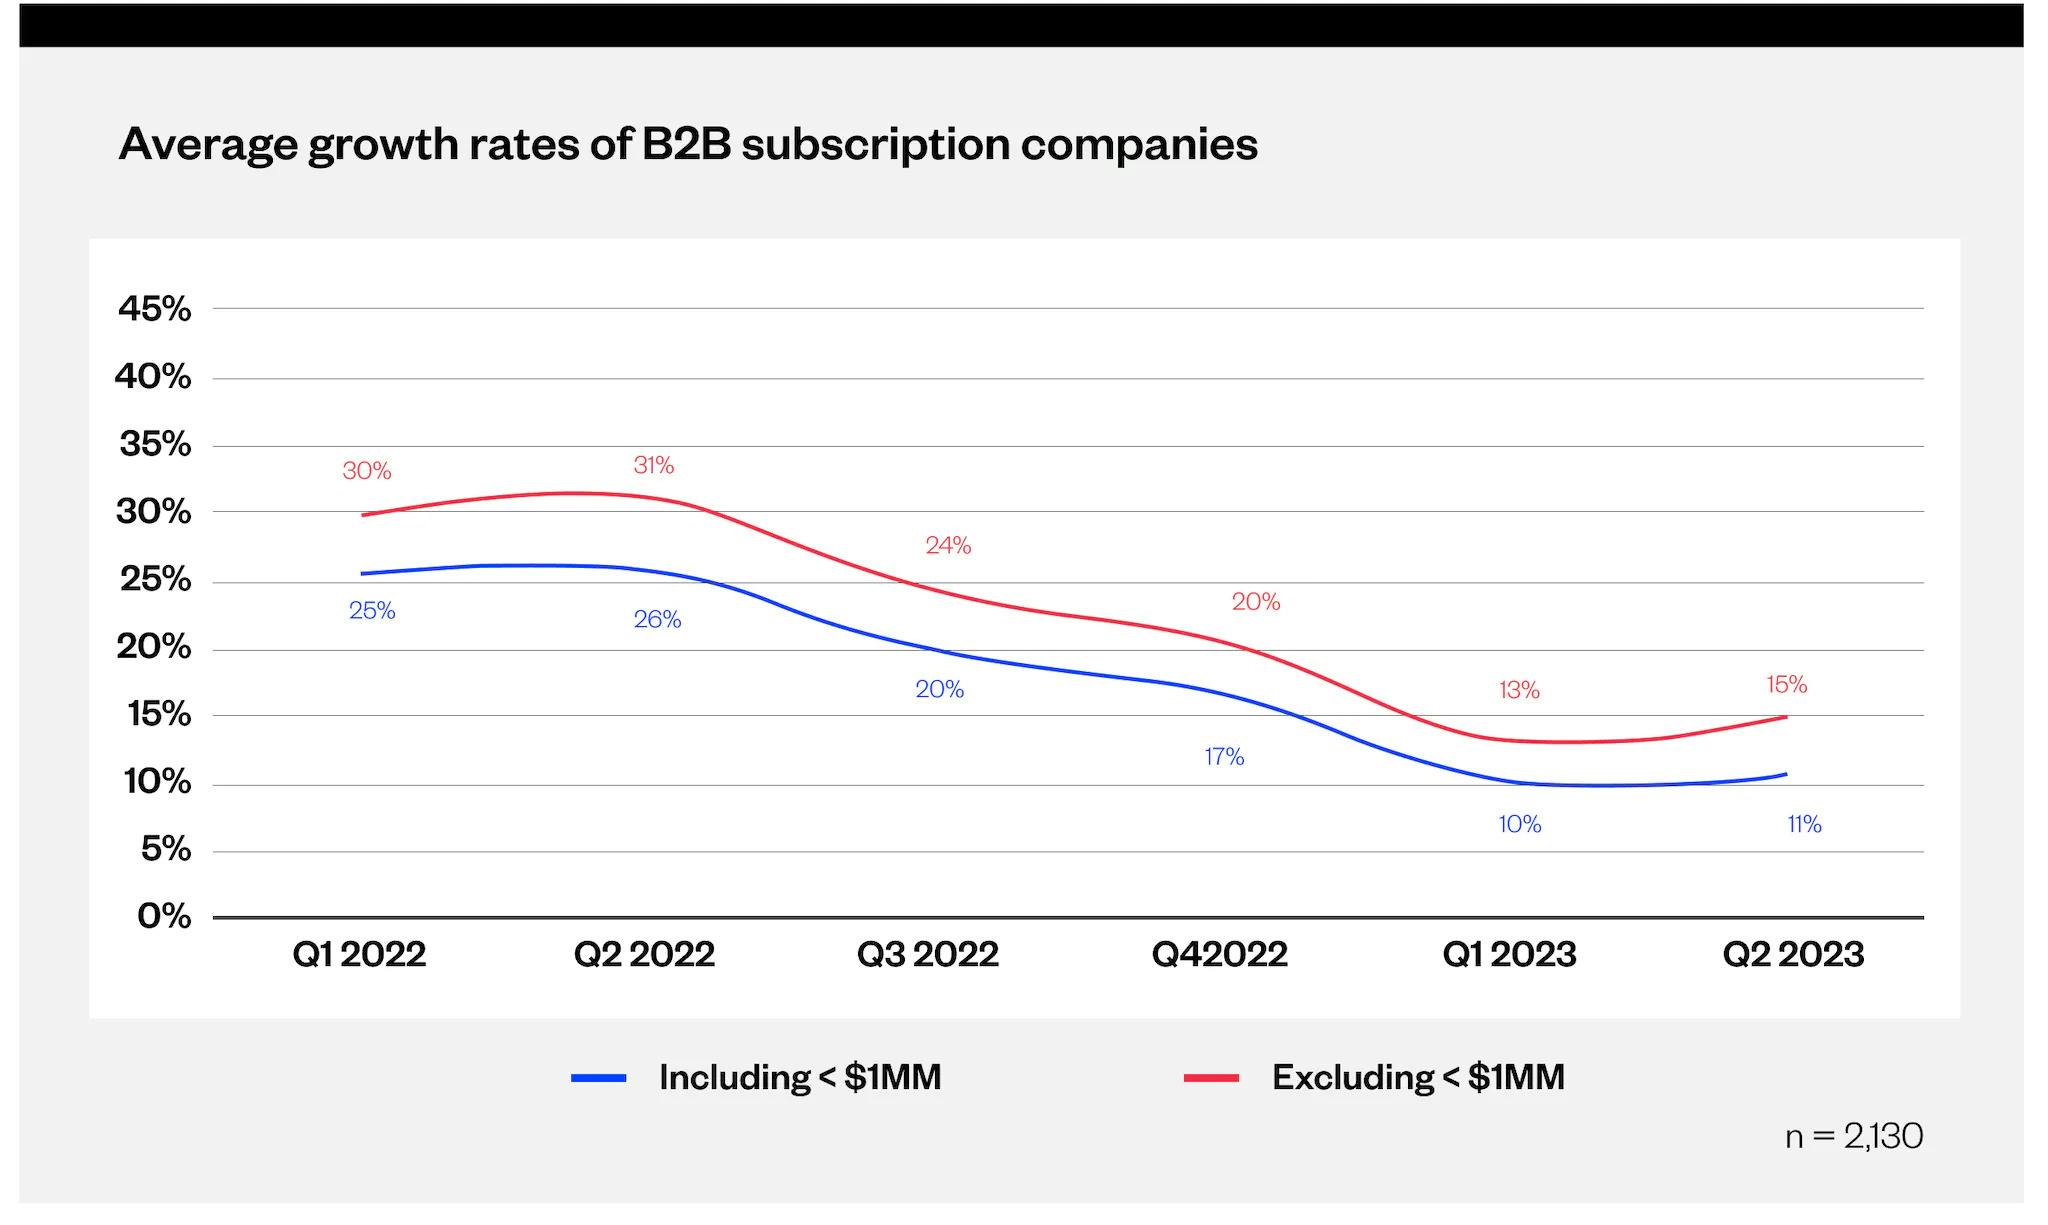 Maxio Institute's Q1 2022-Q2 2023 Average Growth Rates of B2B Subscription Companies chart